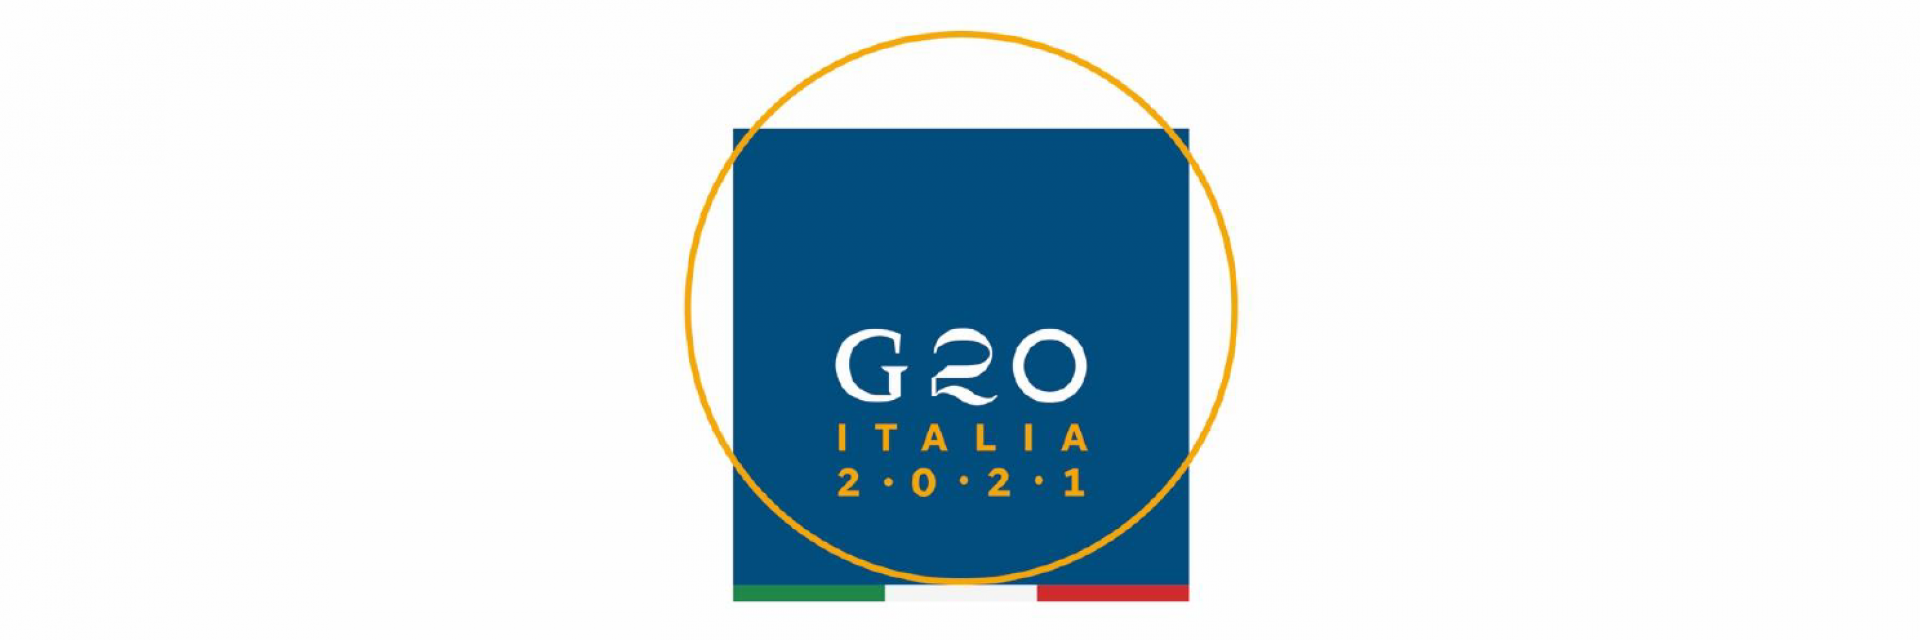 Italian G20 Presidency